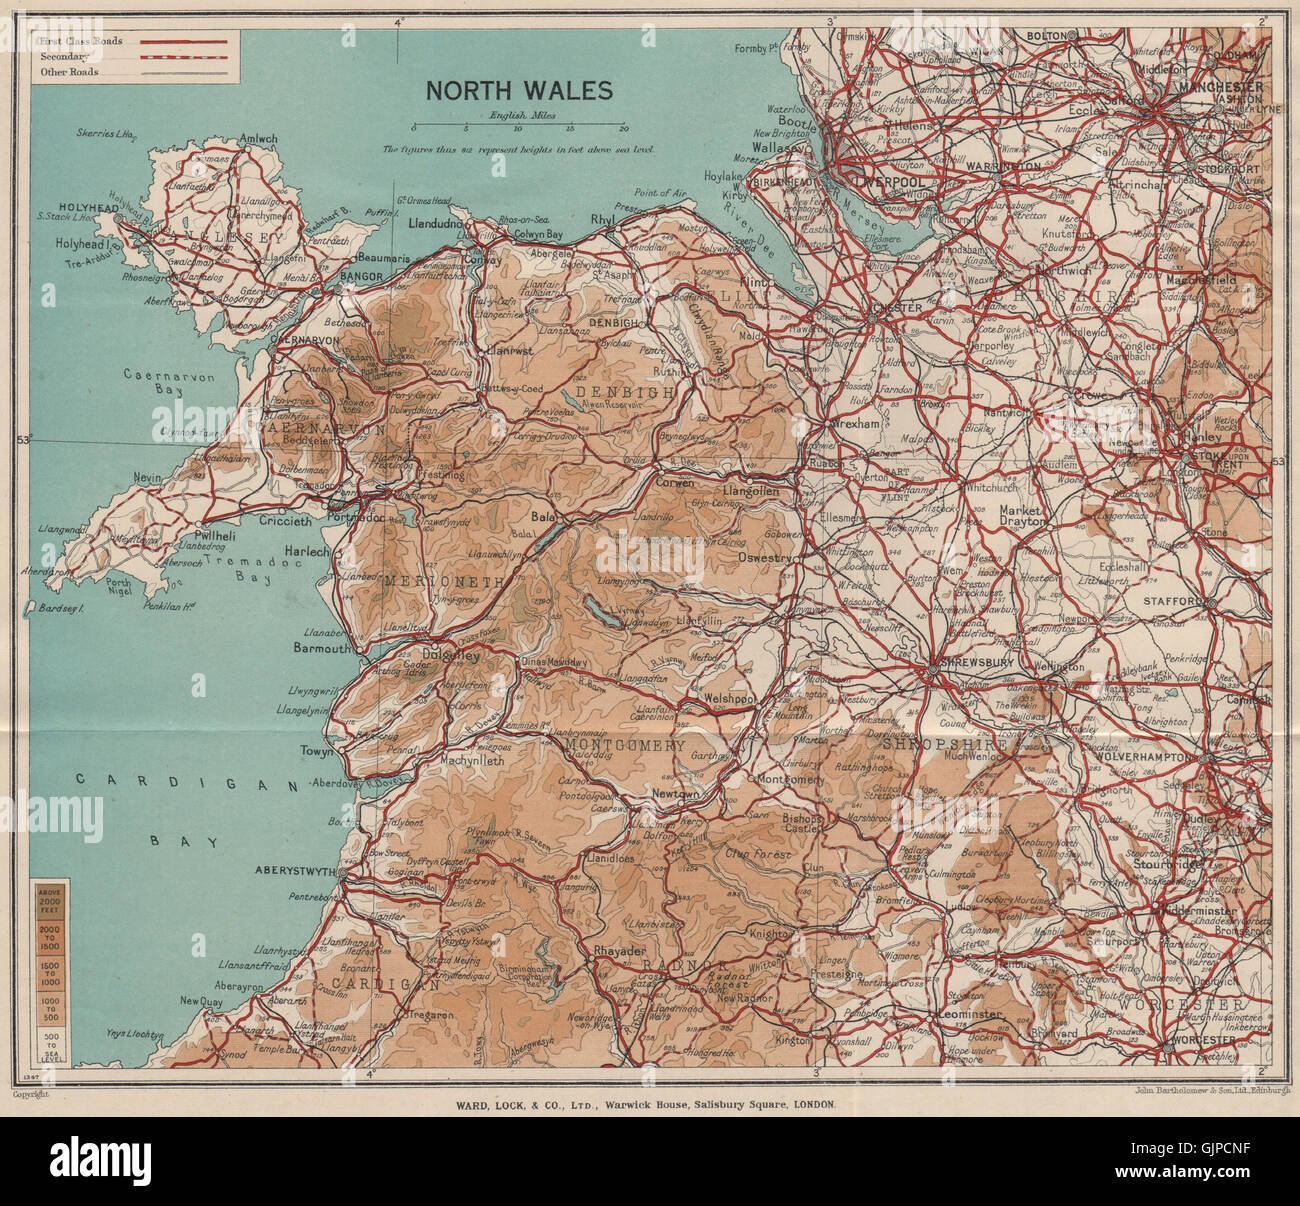 NORTH WALES. Rhyl Flint. WARD LOCK, 1937 vintage map Stock Photo